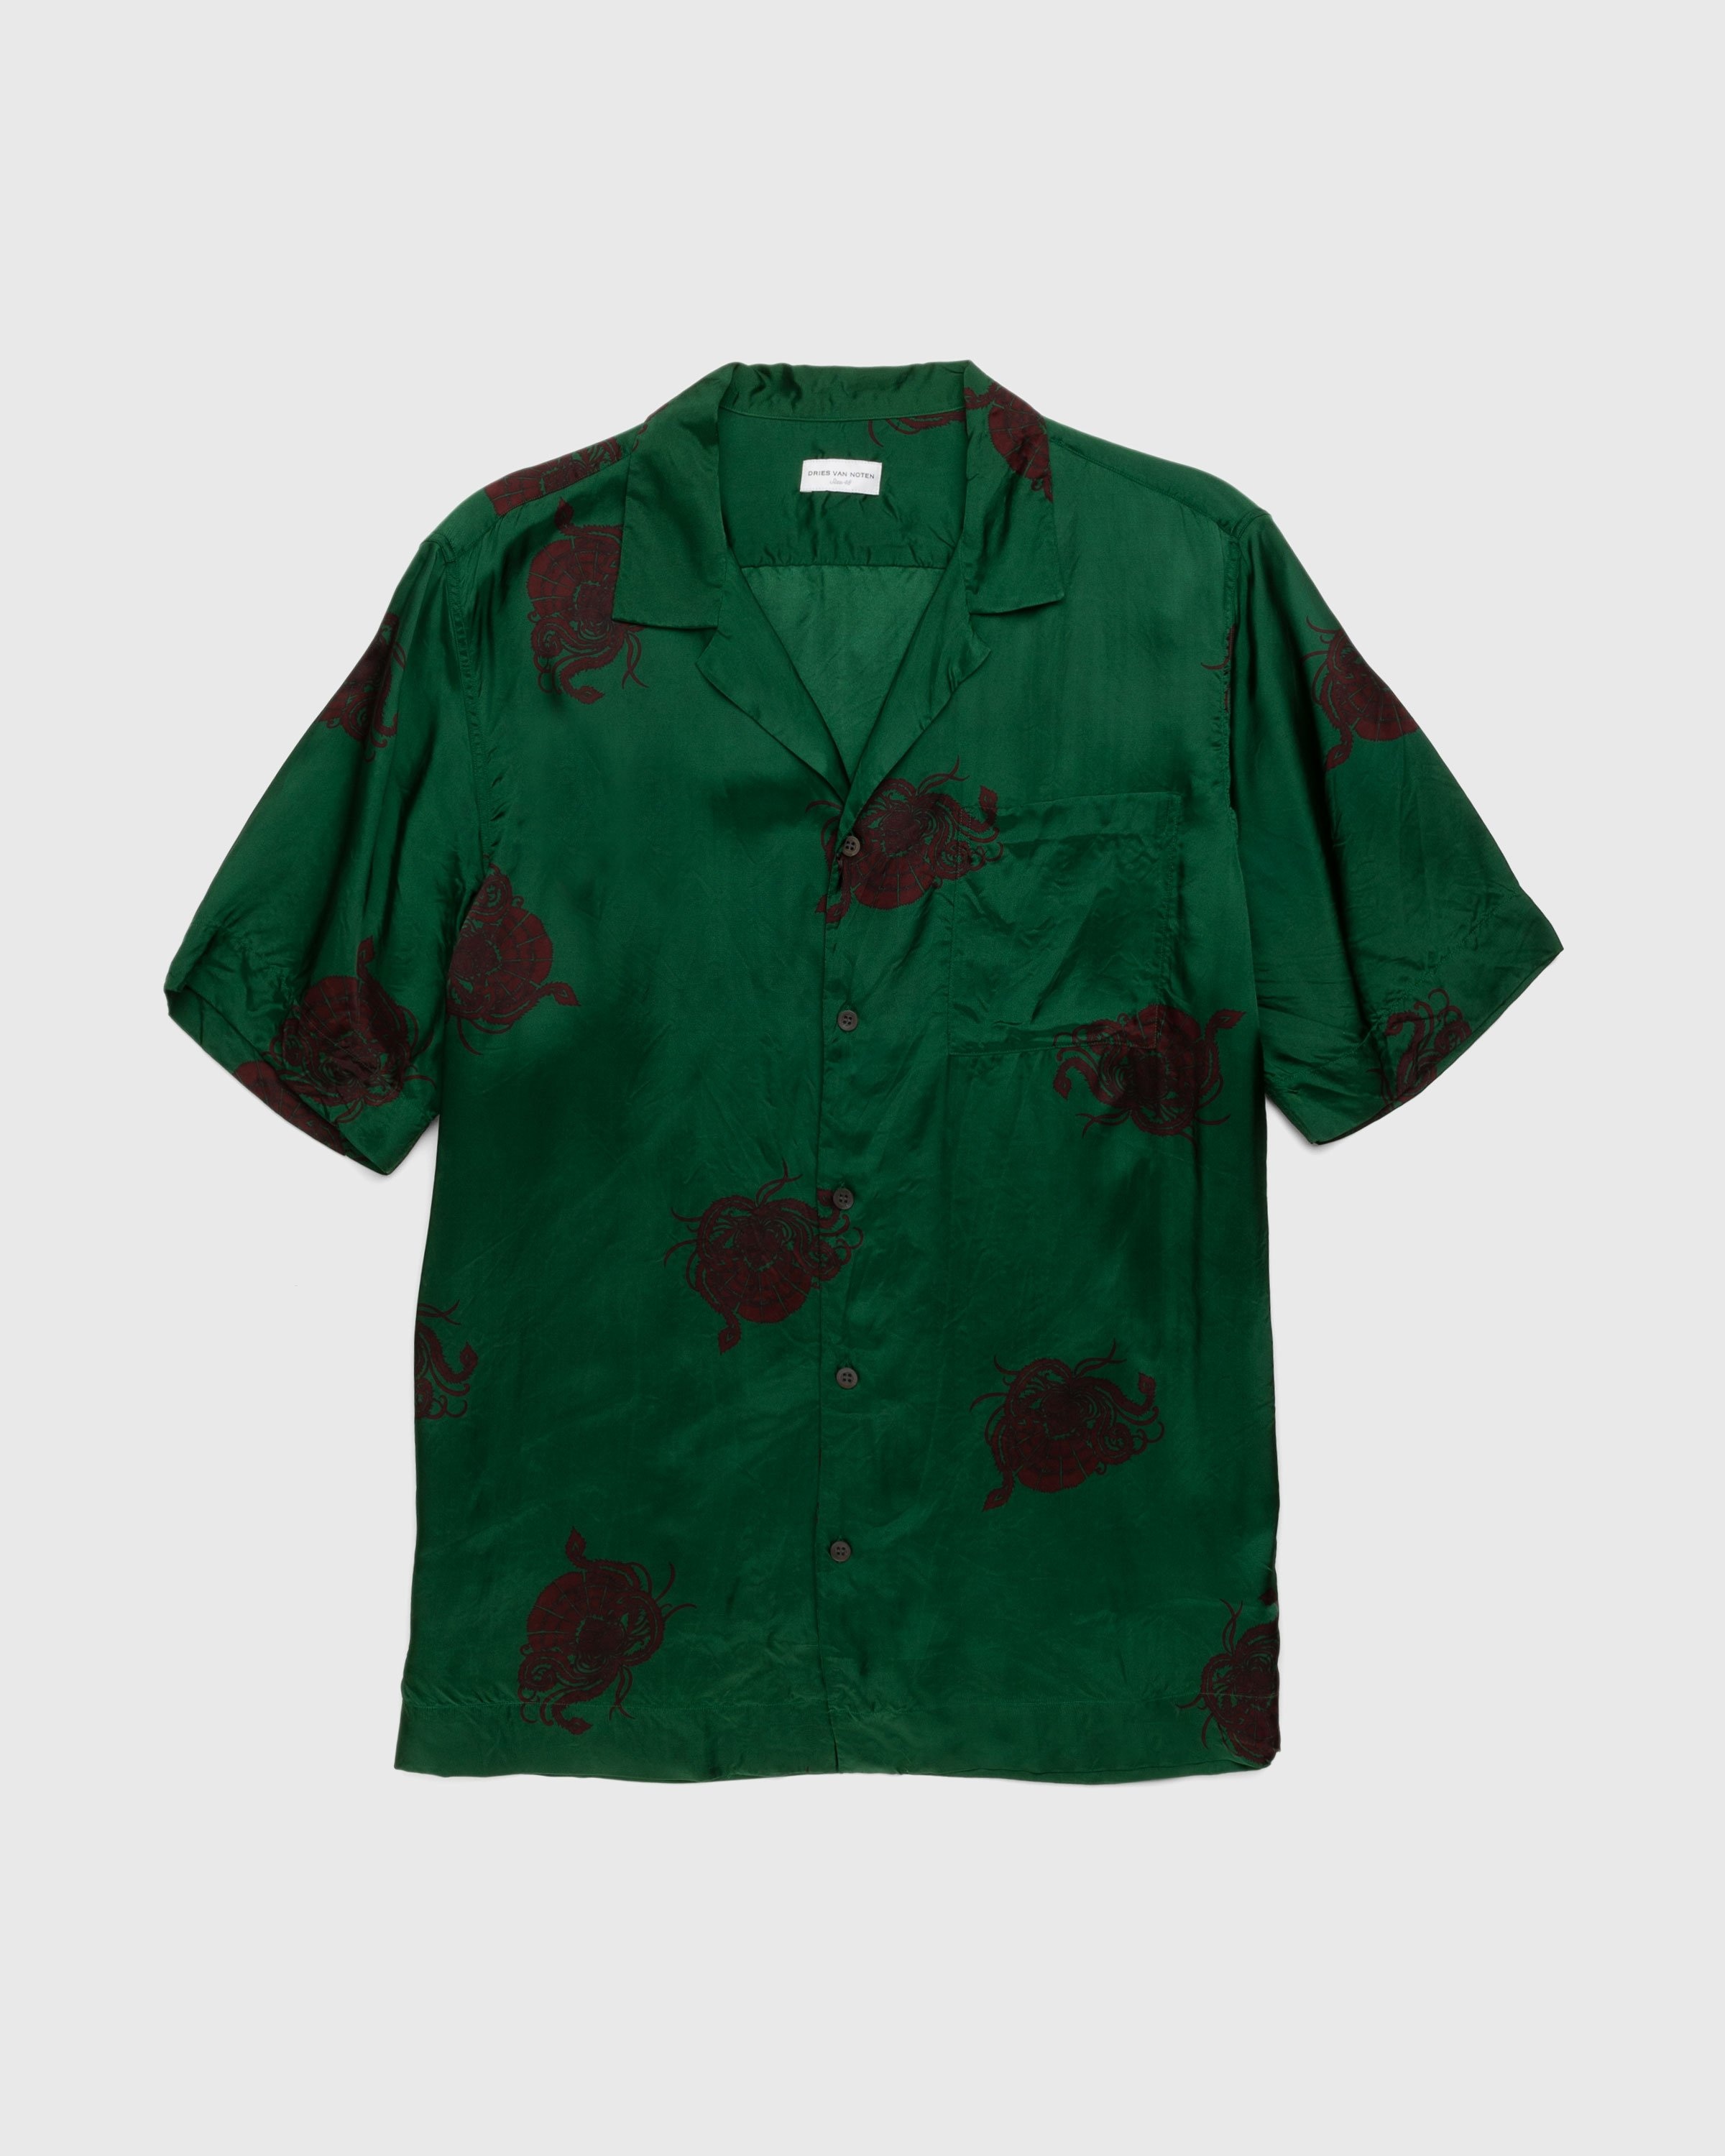 Dries van Noten – Carltone Shirt Bottle - Shirts - Green - Image 1